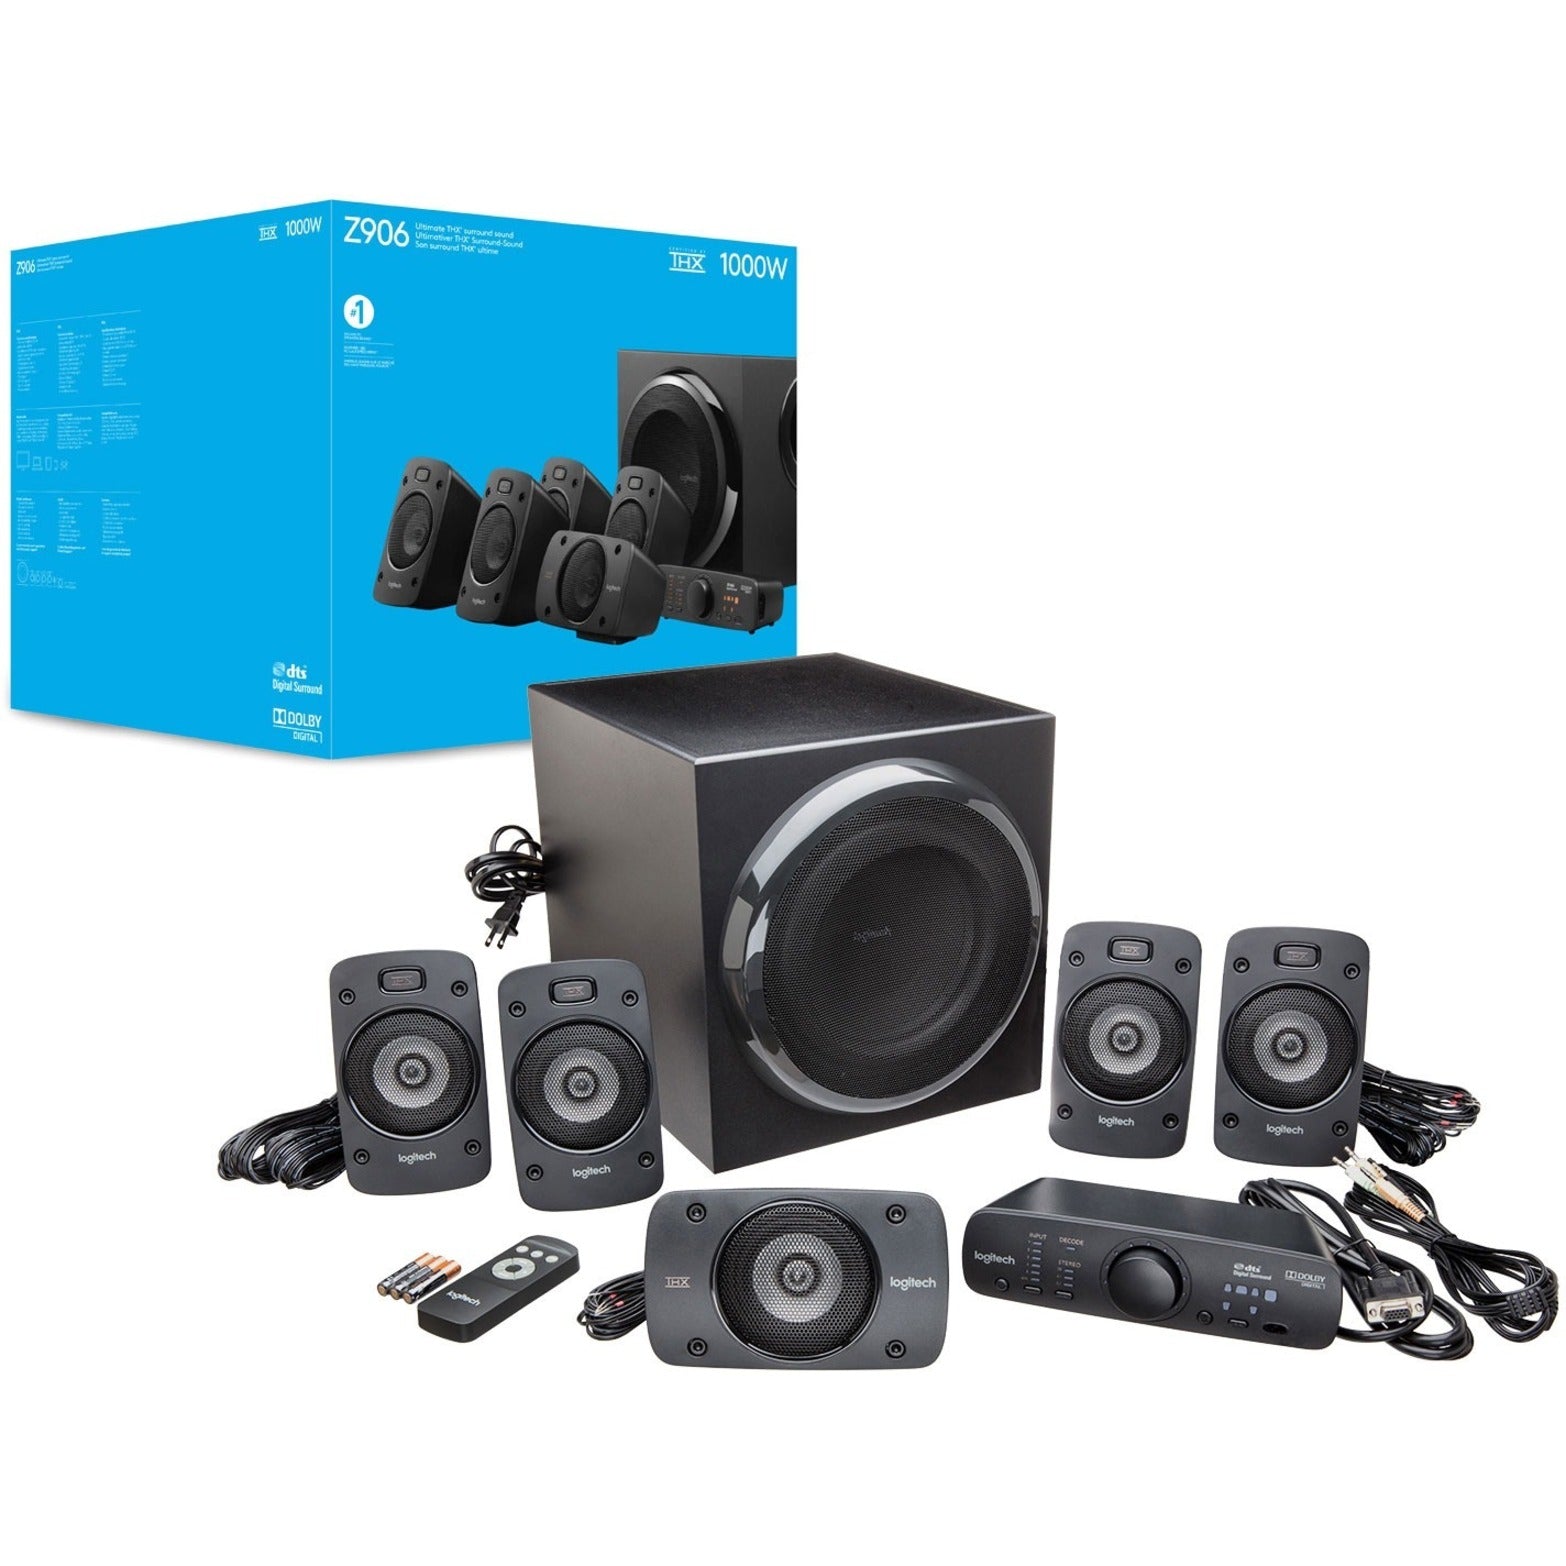 Logitech 980-000467 Z906 Speaker System, 500W RMS, DTS, Dolby Digital, 3D Sound